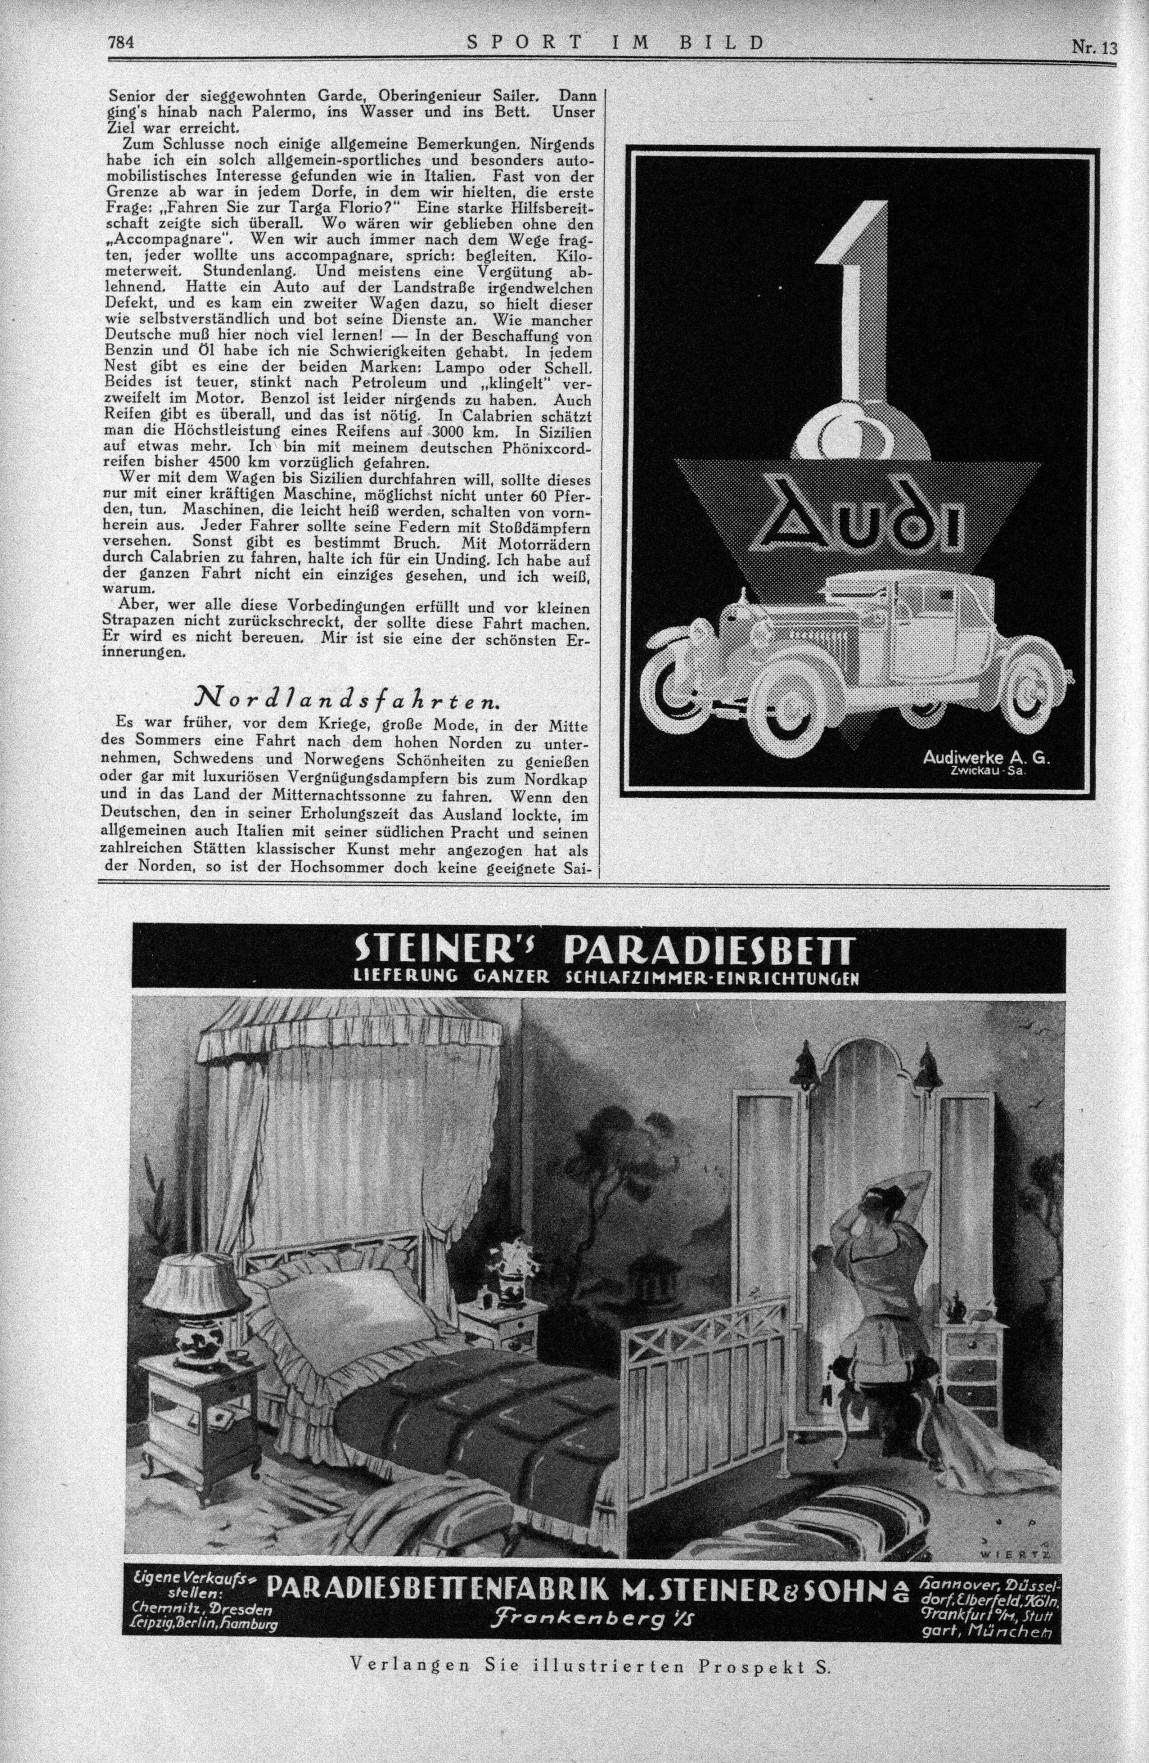 Paradiesbettenfabrik Steiner und Sohn AG, Audi, 1924 anno.onb.ac.at/cgi-content/anno-plus?aid=sib&datum=1924&page=712&size=45